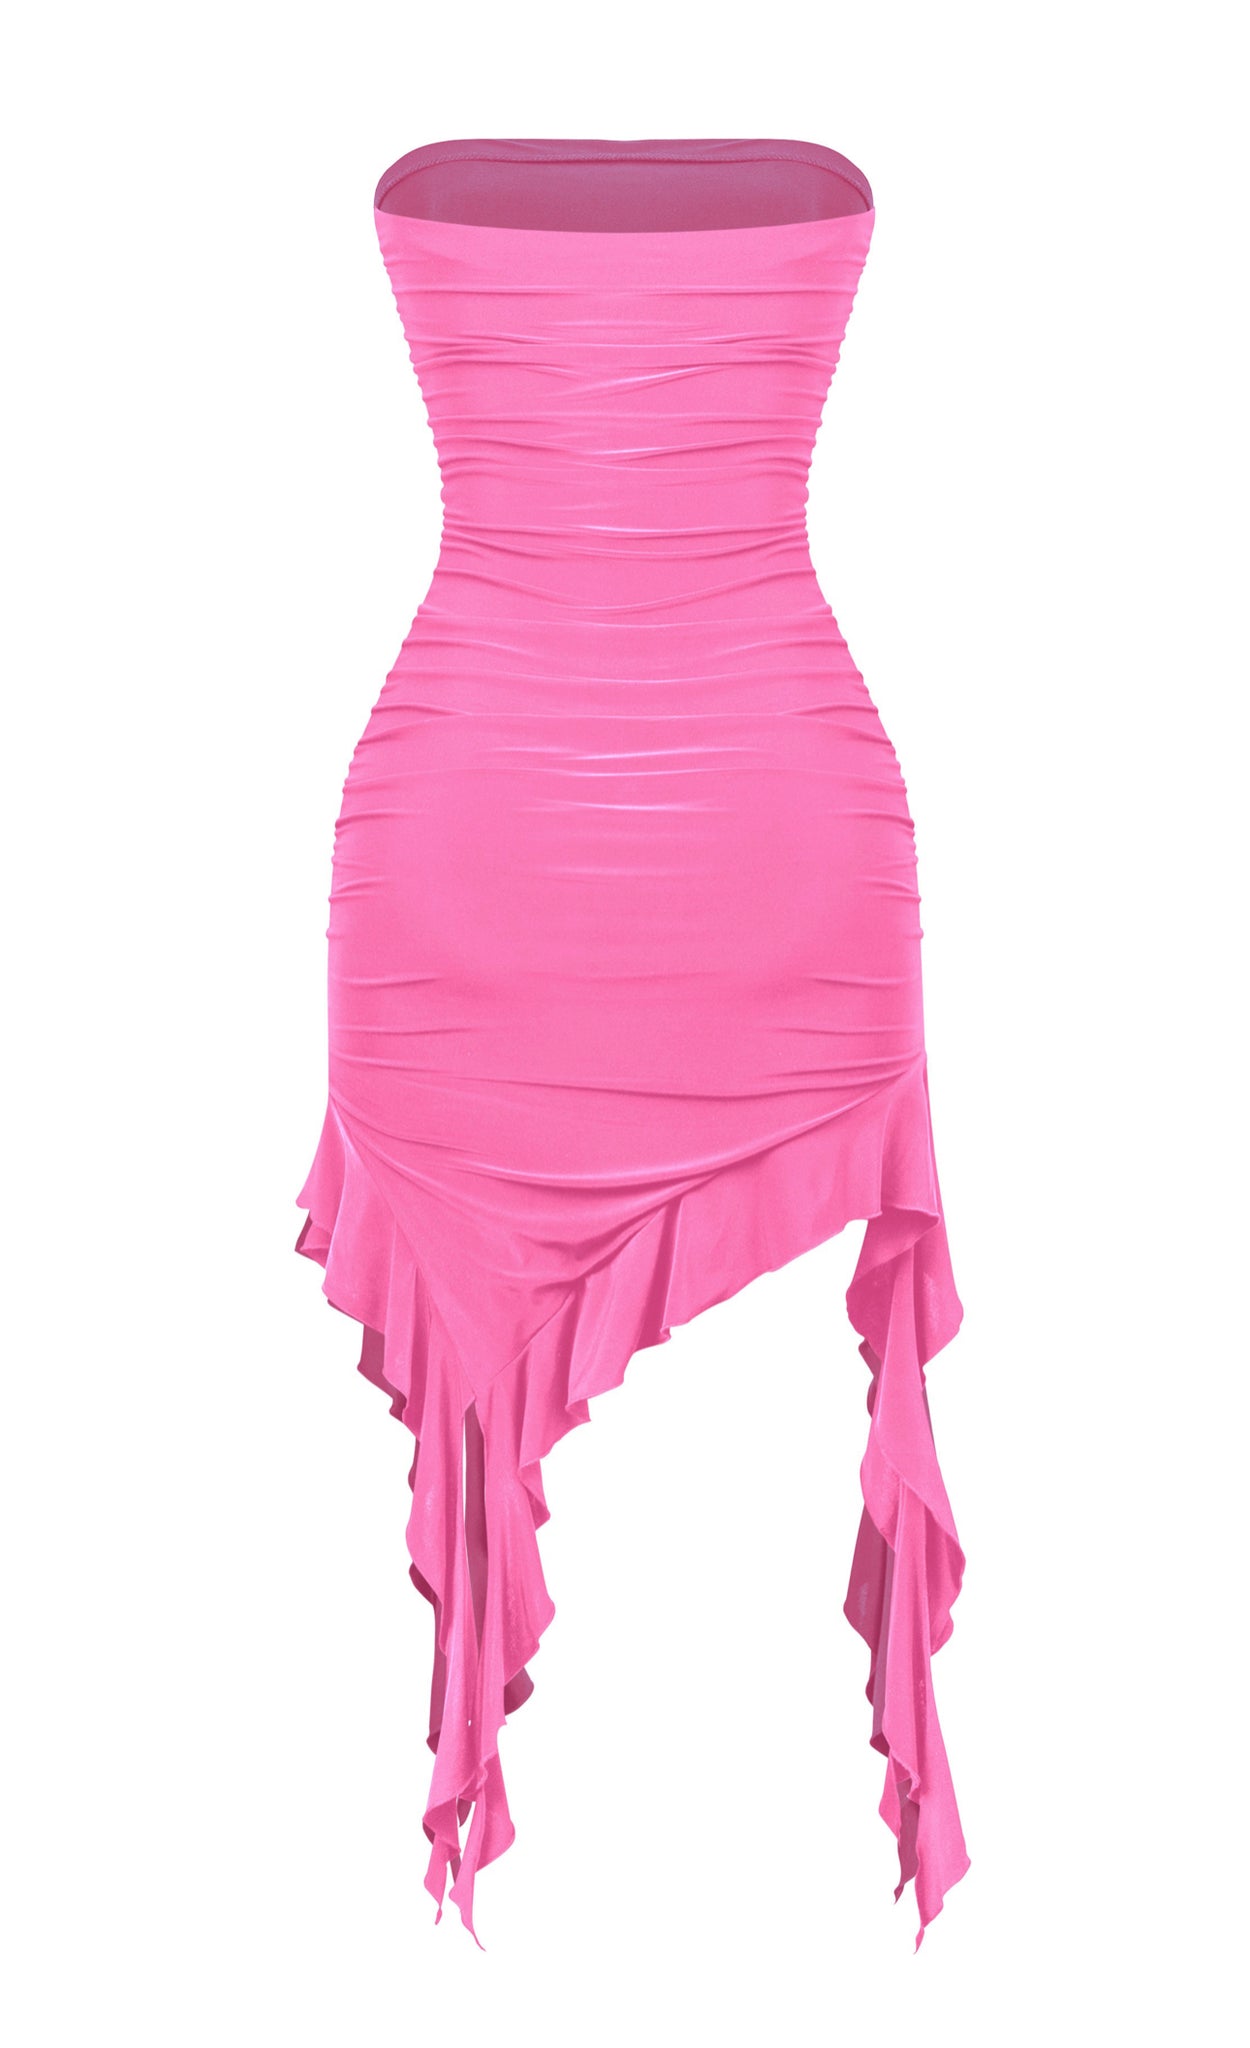 Naylea Ruffled Asymmetrical Dress (Pink)